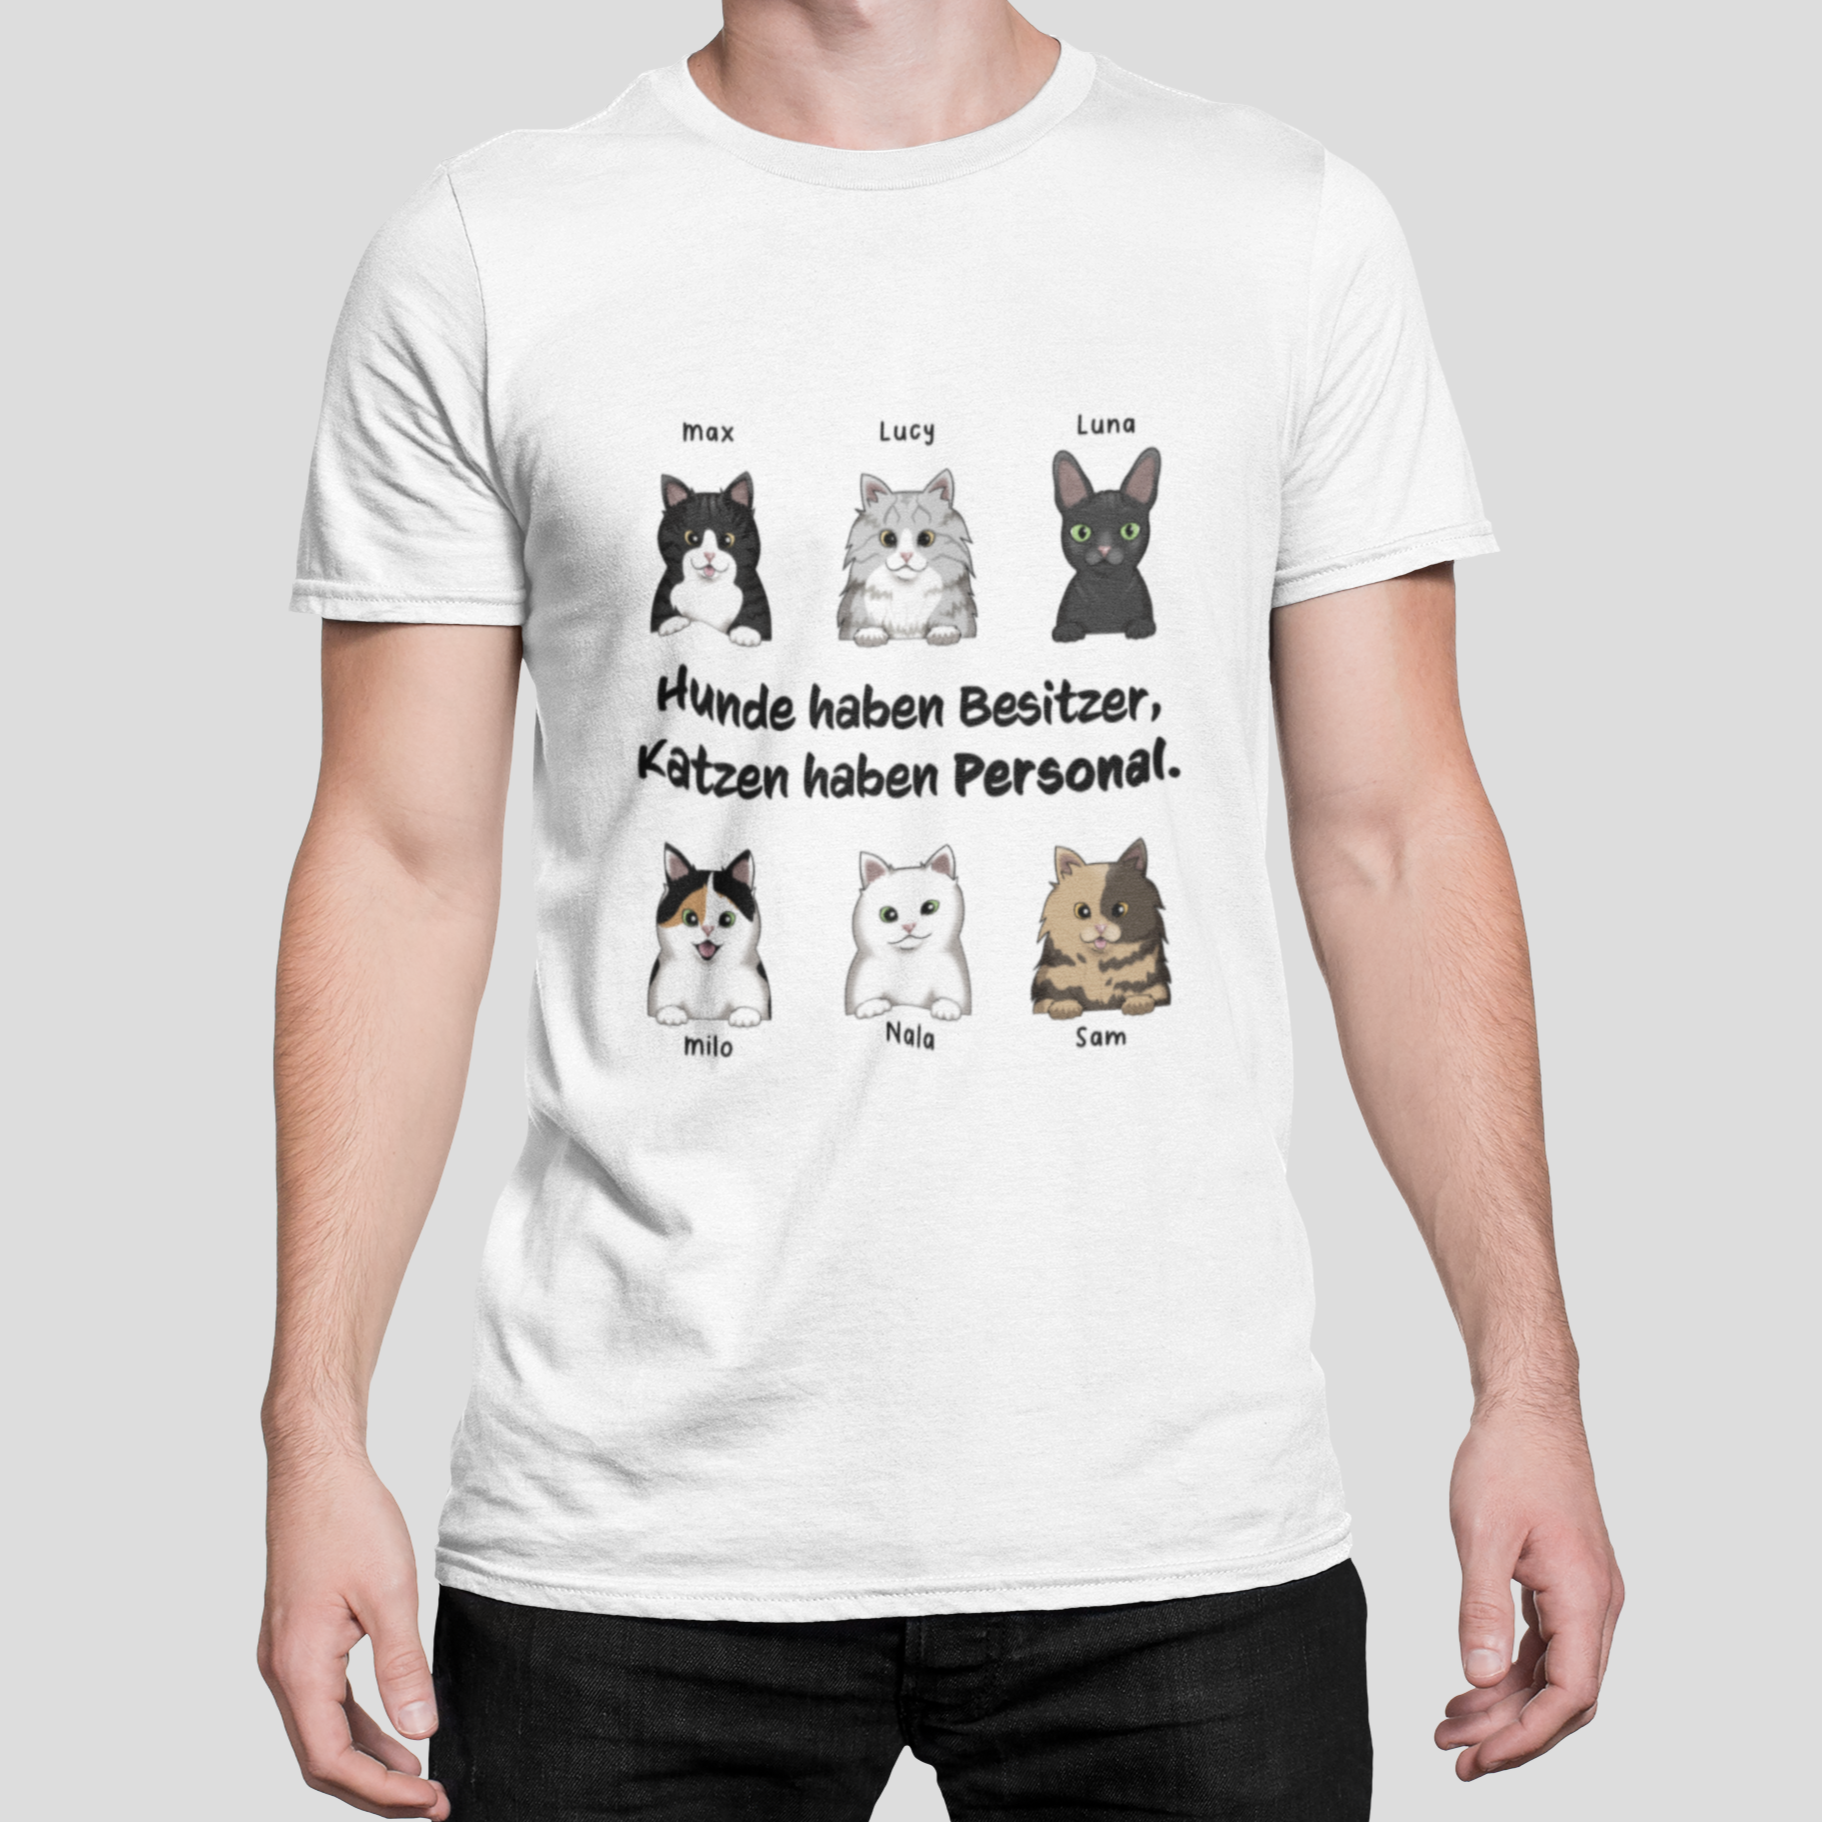 Man wearing a Personalized Katzen haben Personal T-Shirt with unique cat motif print.